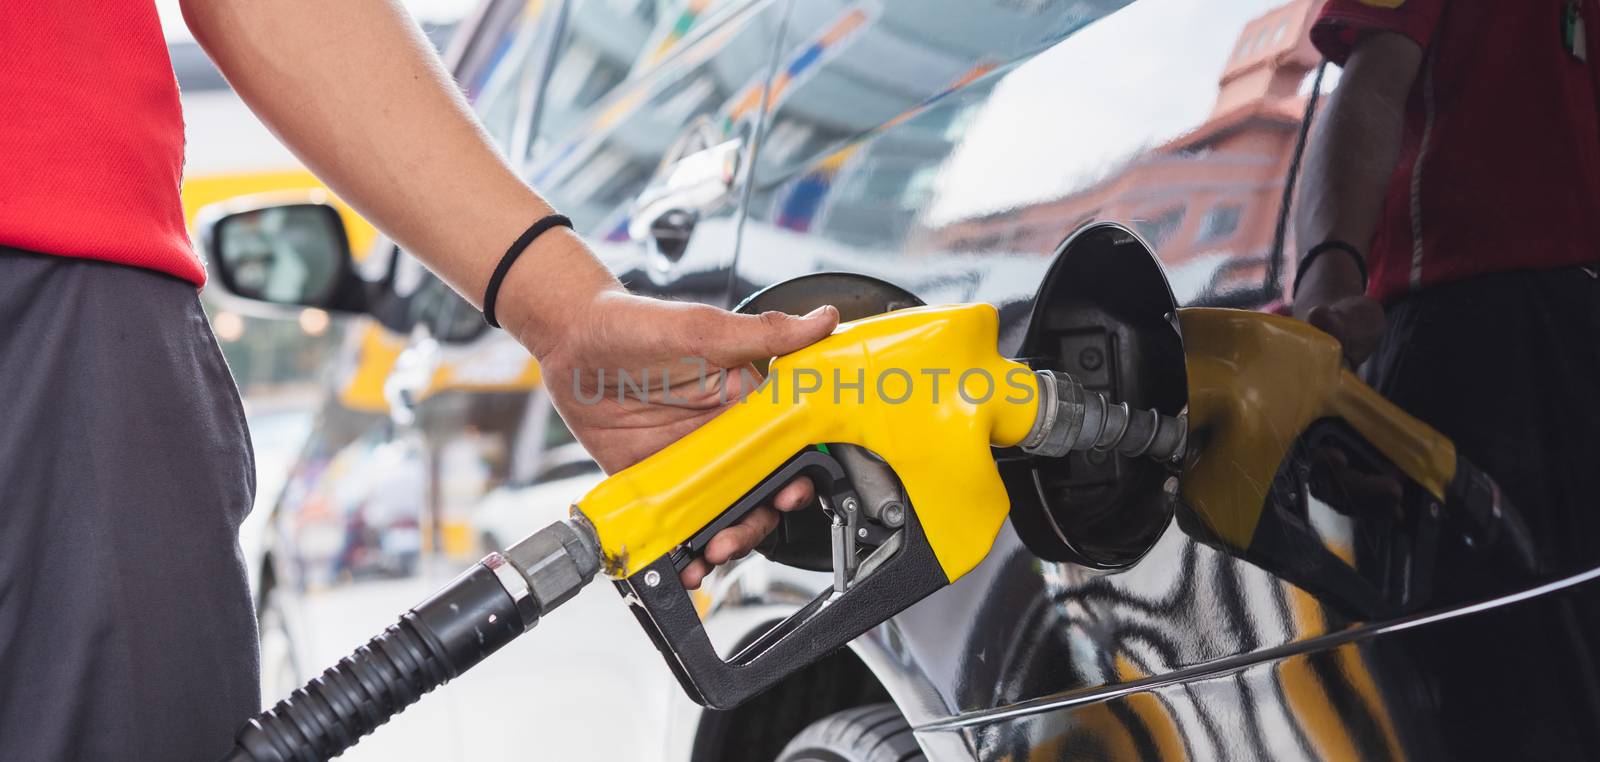 Staff in uniform hand holding gun refueling gasoline vehicle car by Sorapop